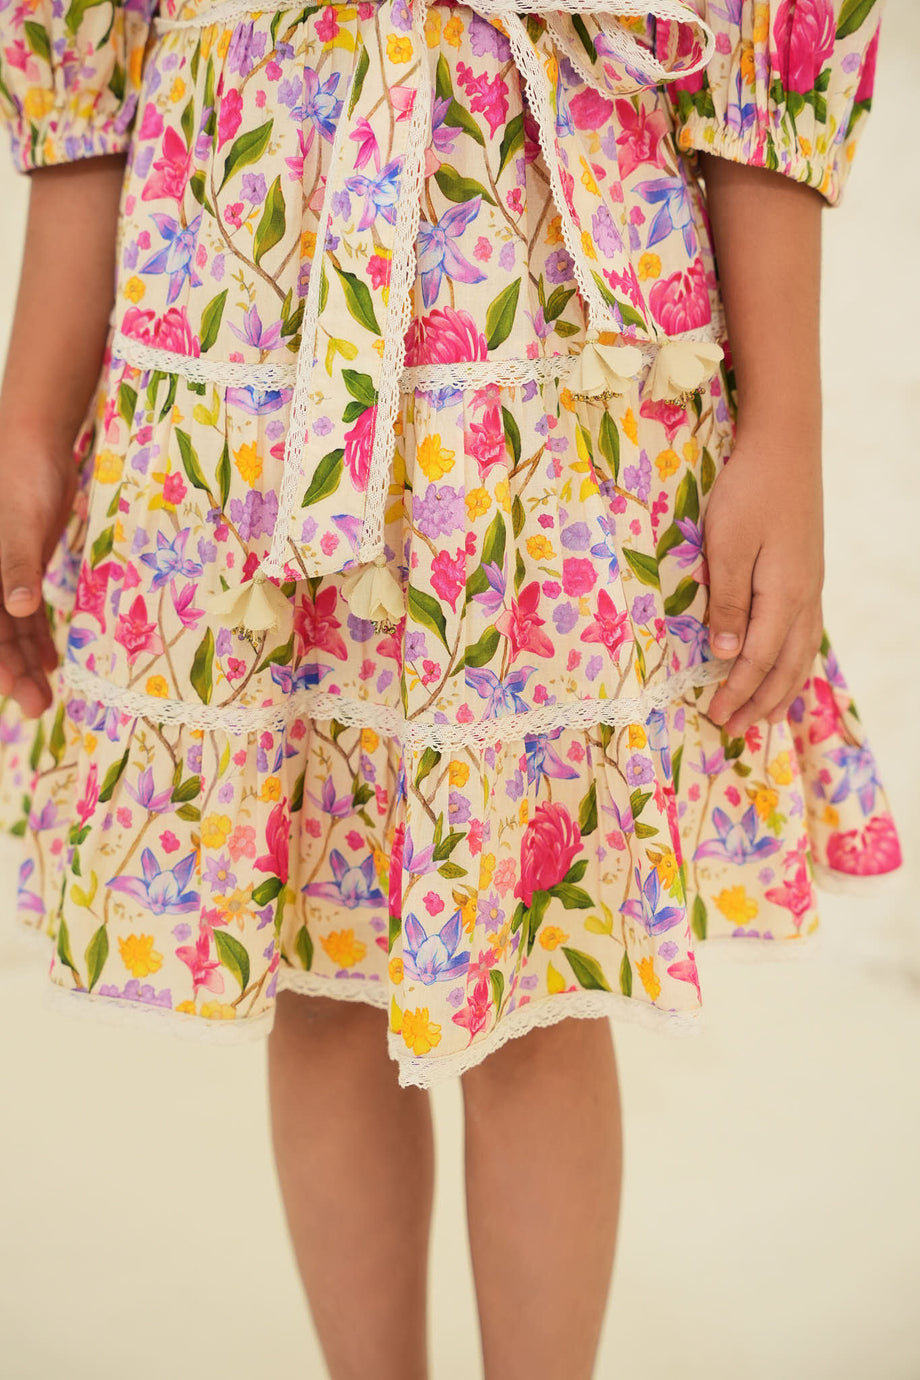 Buy Cotton Fabric Flower Printed Dress